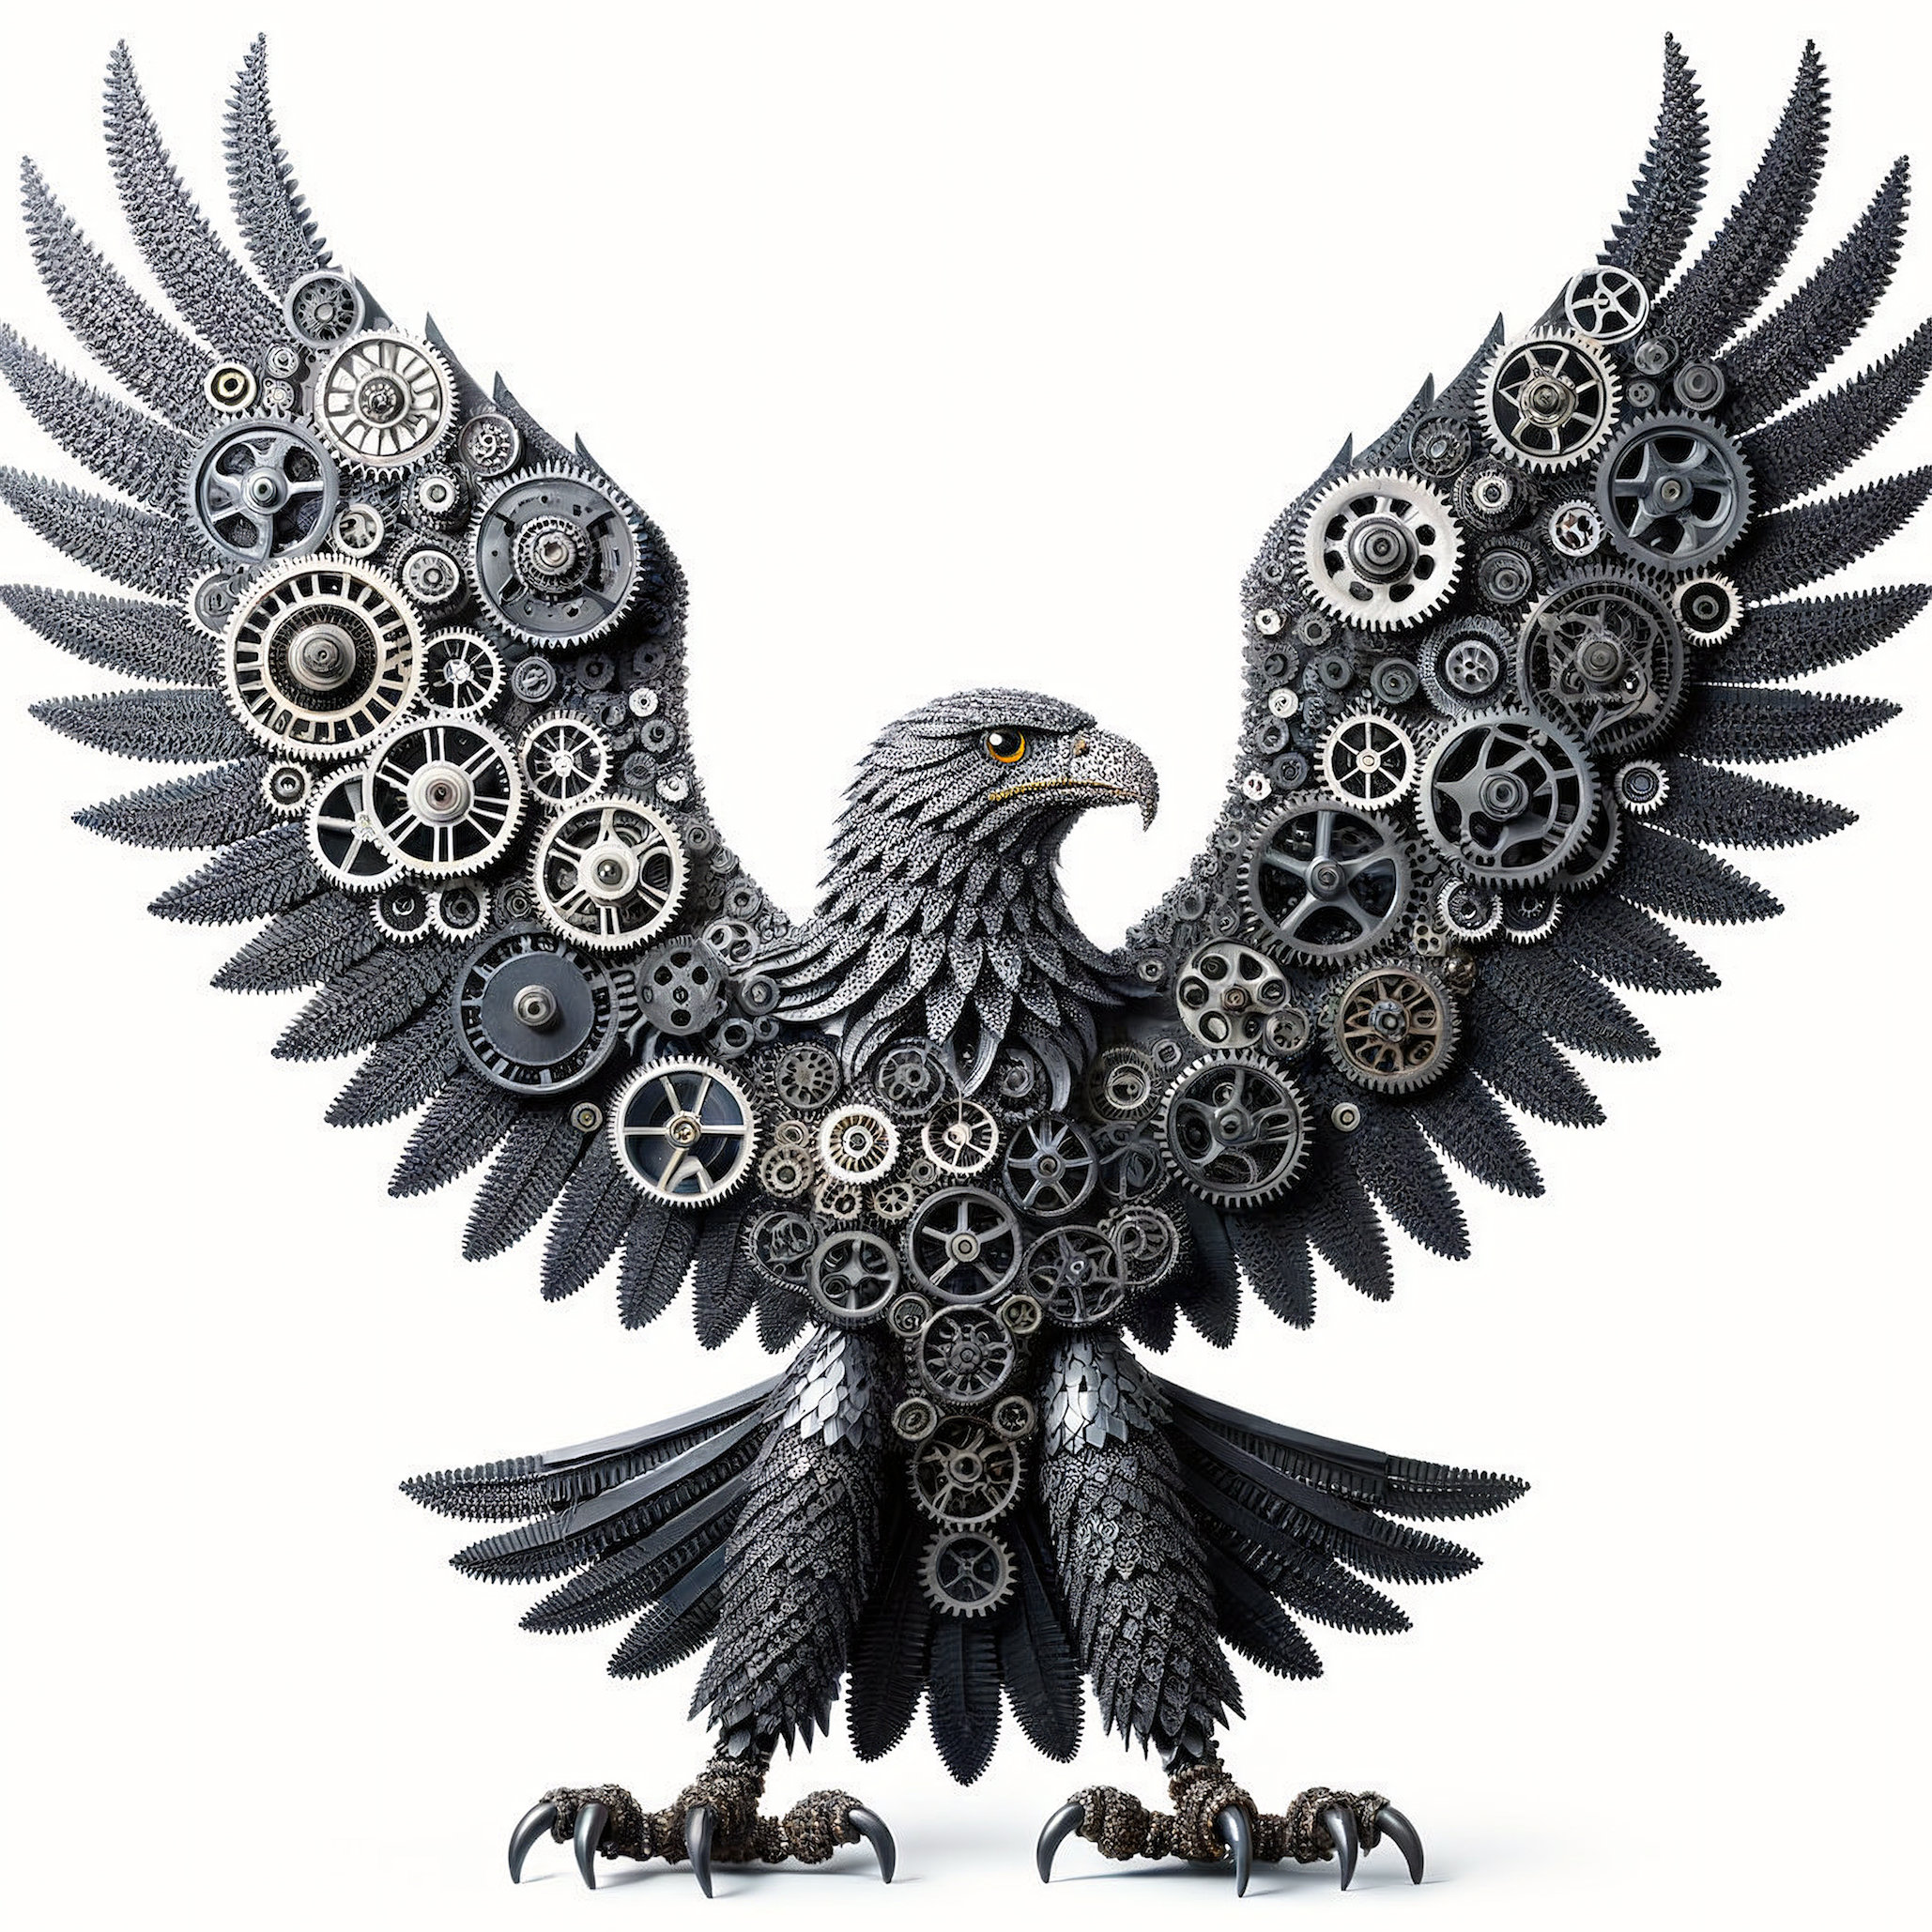 Geared Eagle.jpg